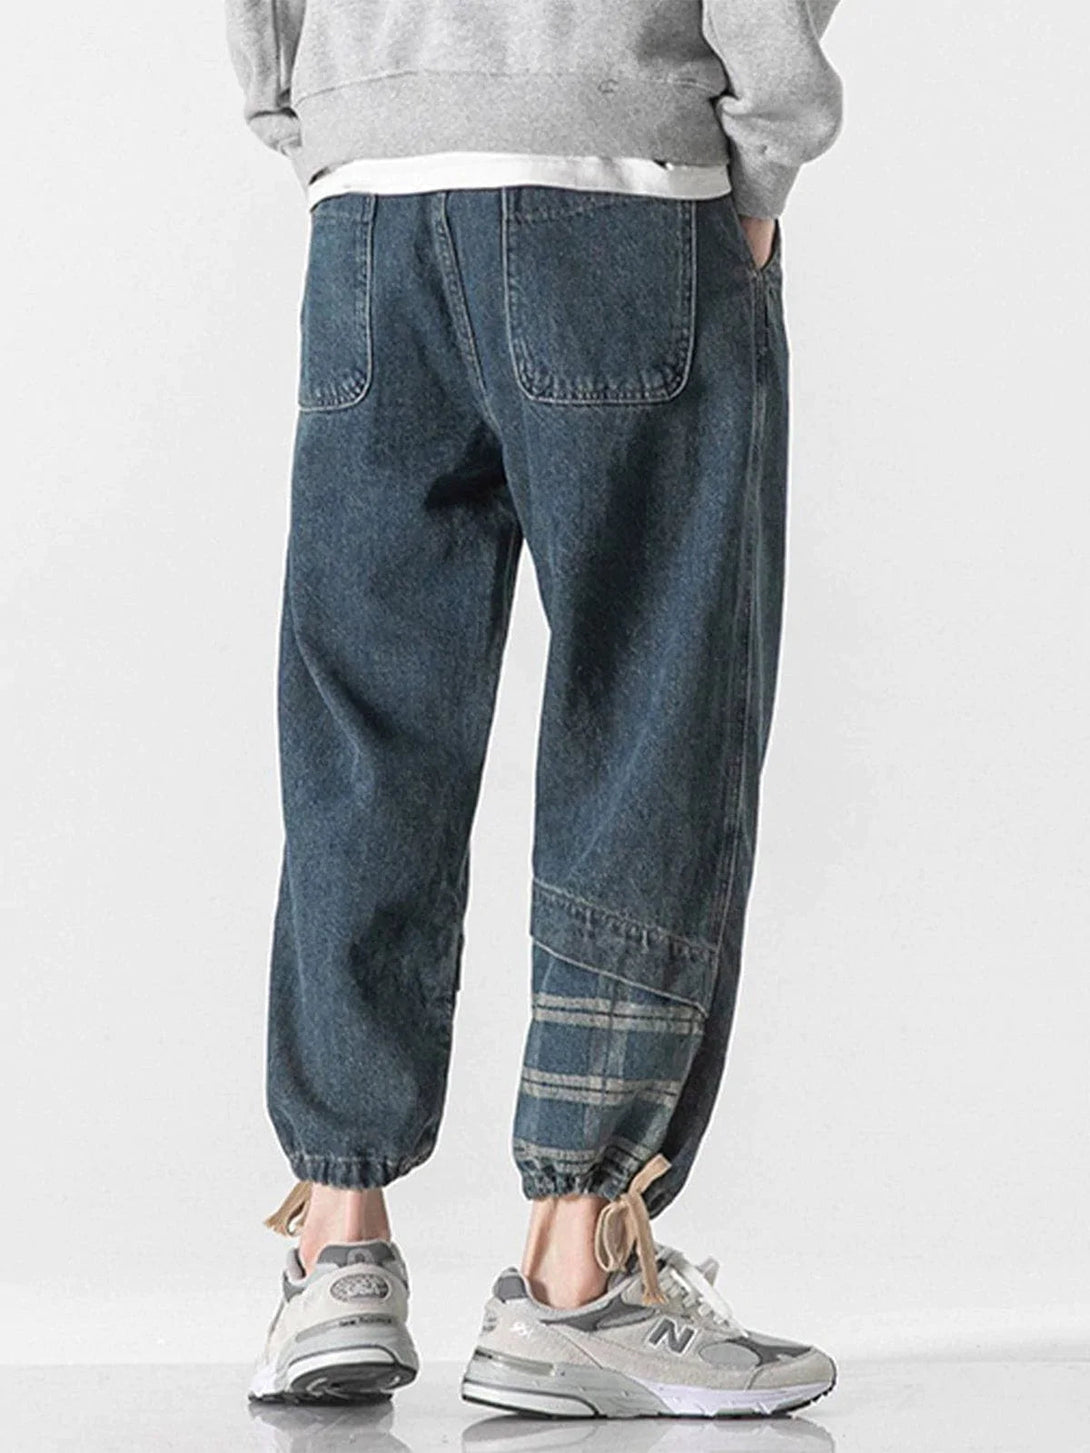 Majesda® - Panelled Plaid Belt Embellished Jeans outfit ideas streetwear fashion